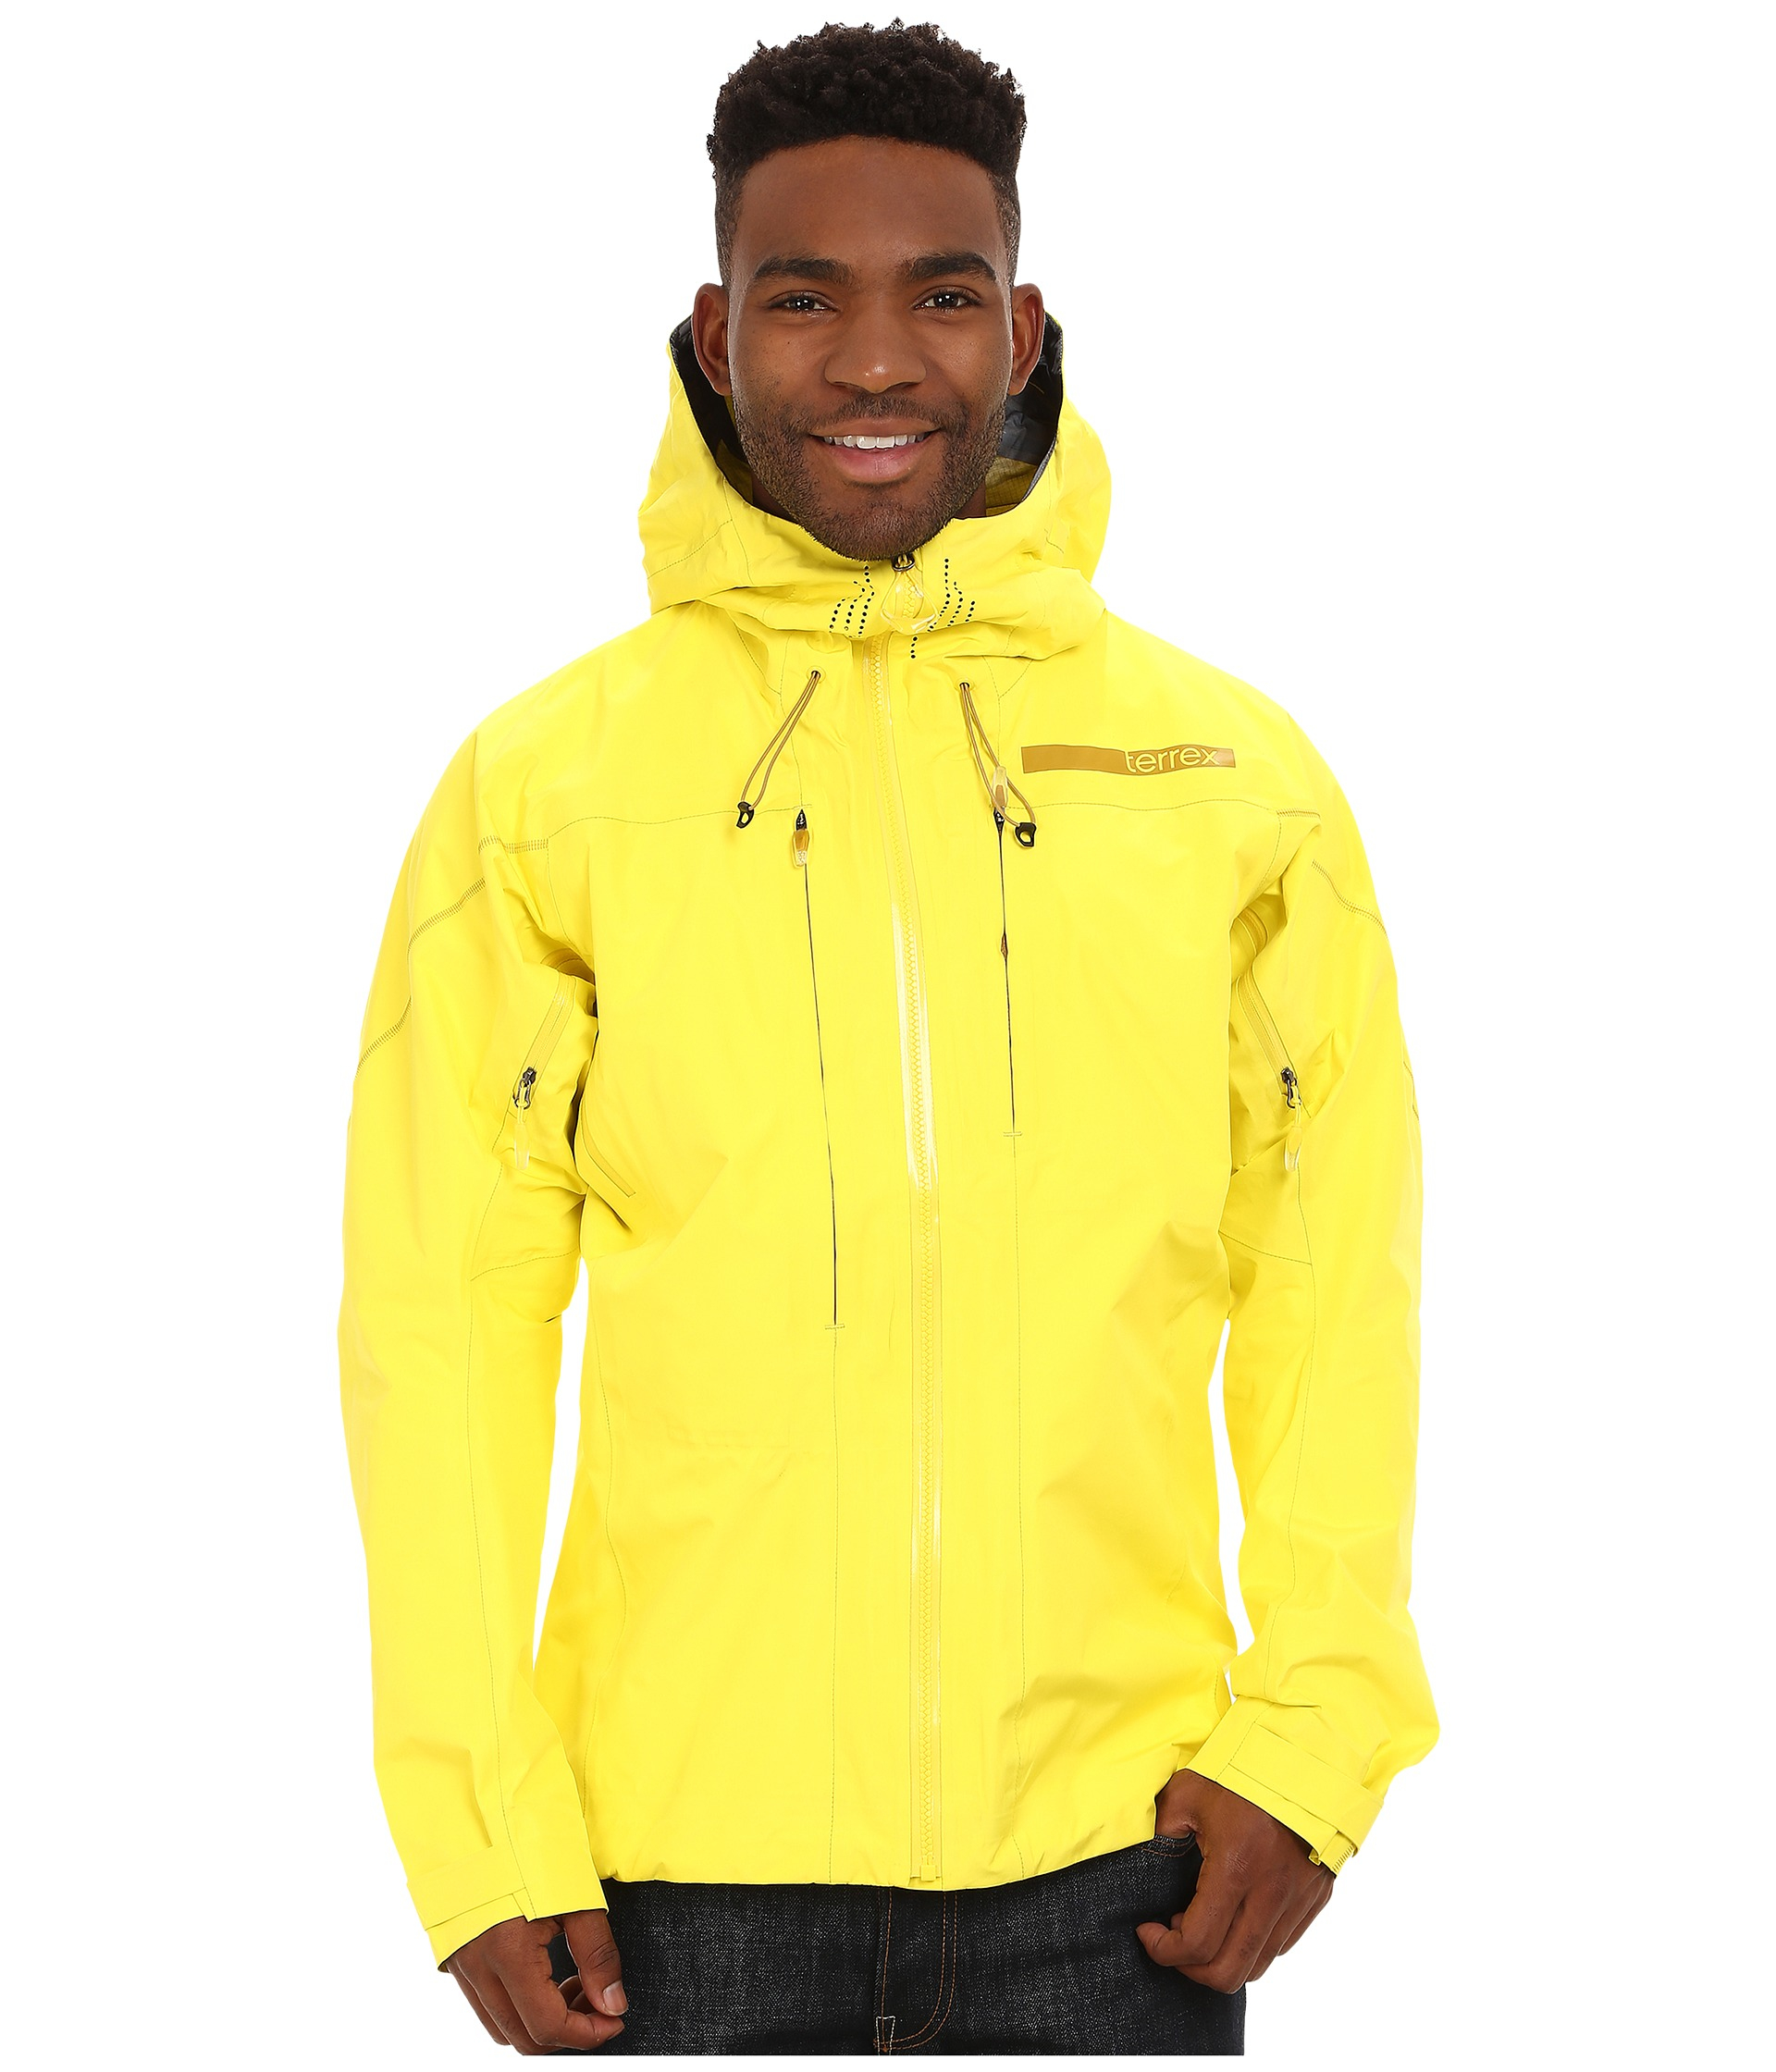 Buy > adidas terrex jacket yellow > in stock